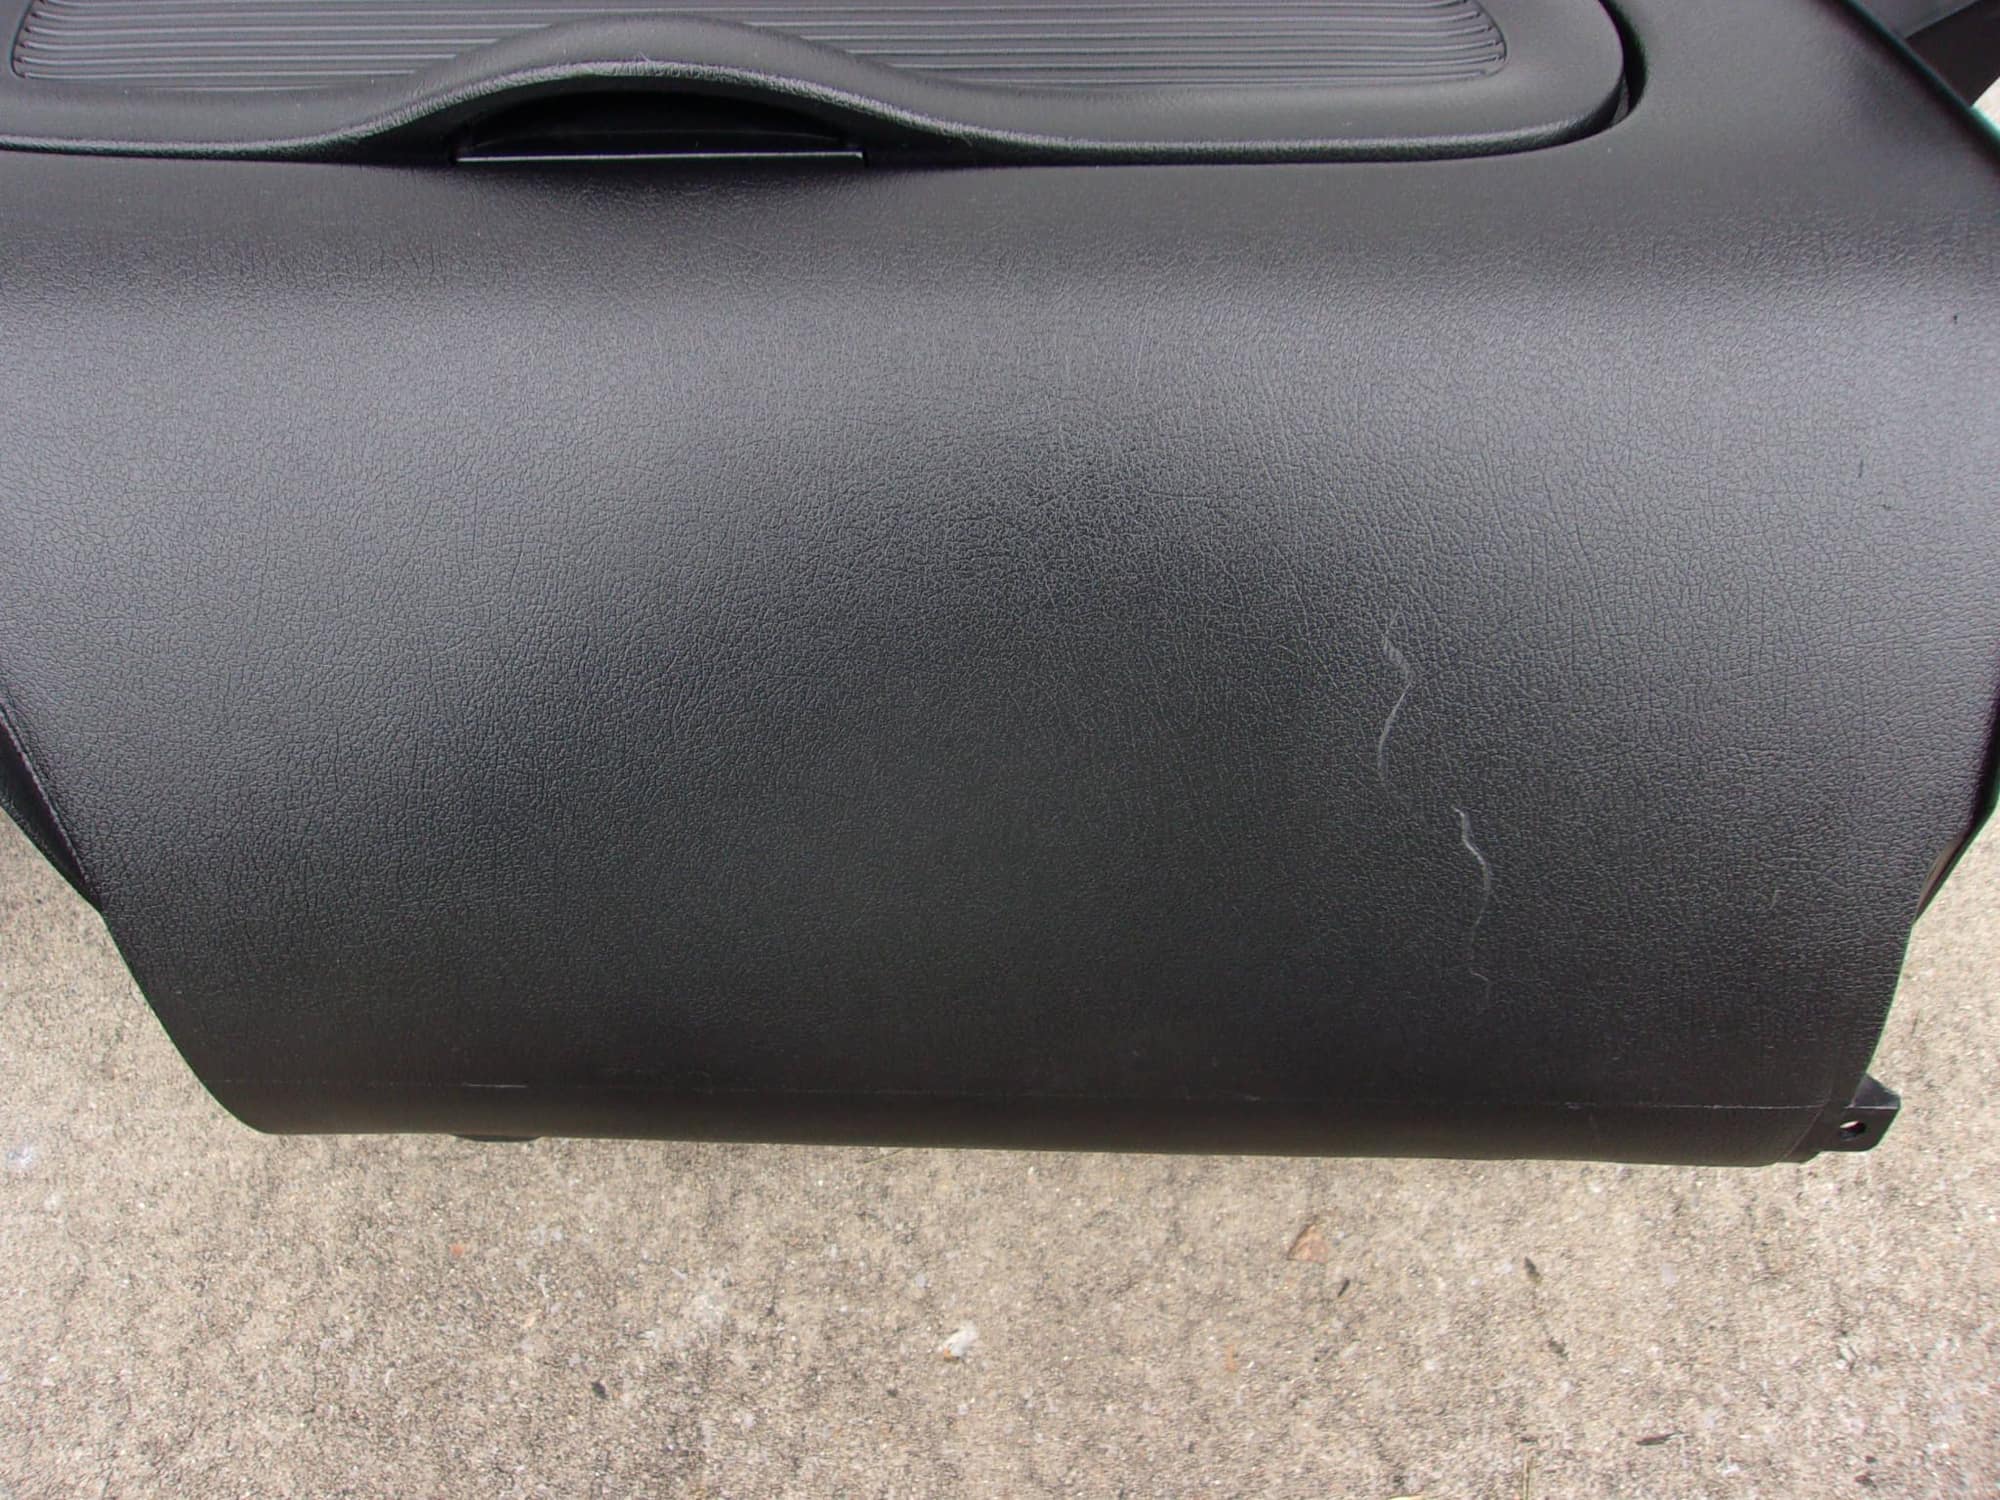 Interior/Upholstery - Black Bins - Used - 1993 to 1995 Mazda RX-7 - Murfreesboro, TN 37130, United States